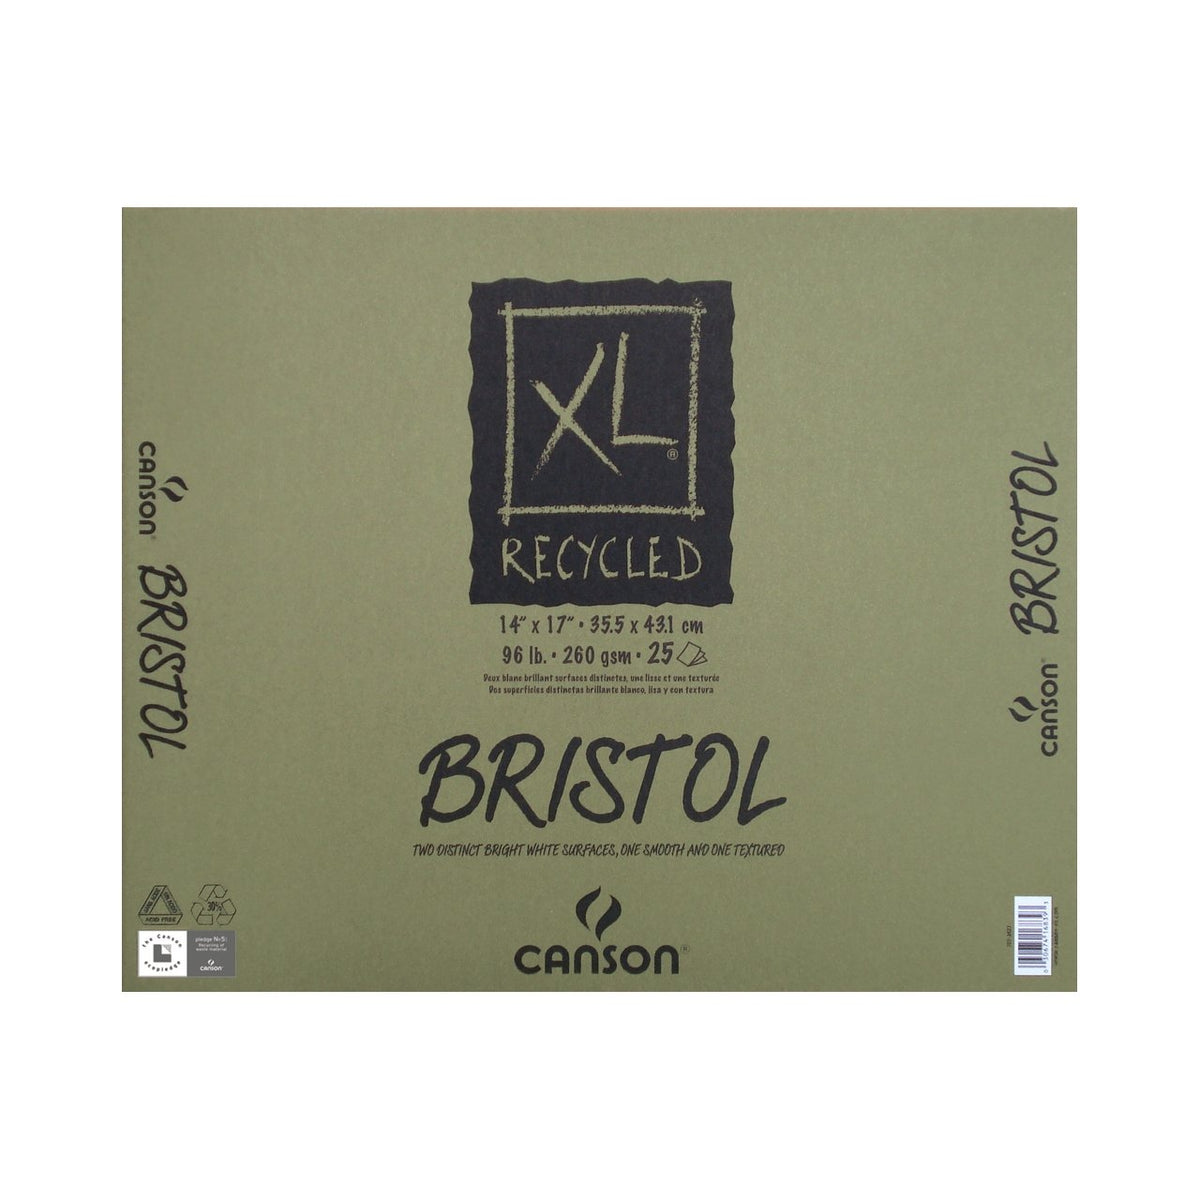 Canson Bristol Sheets